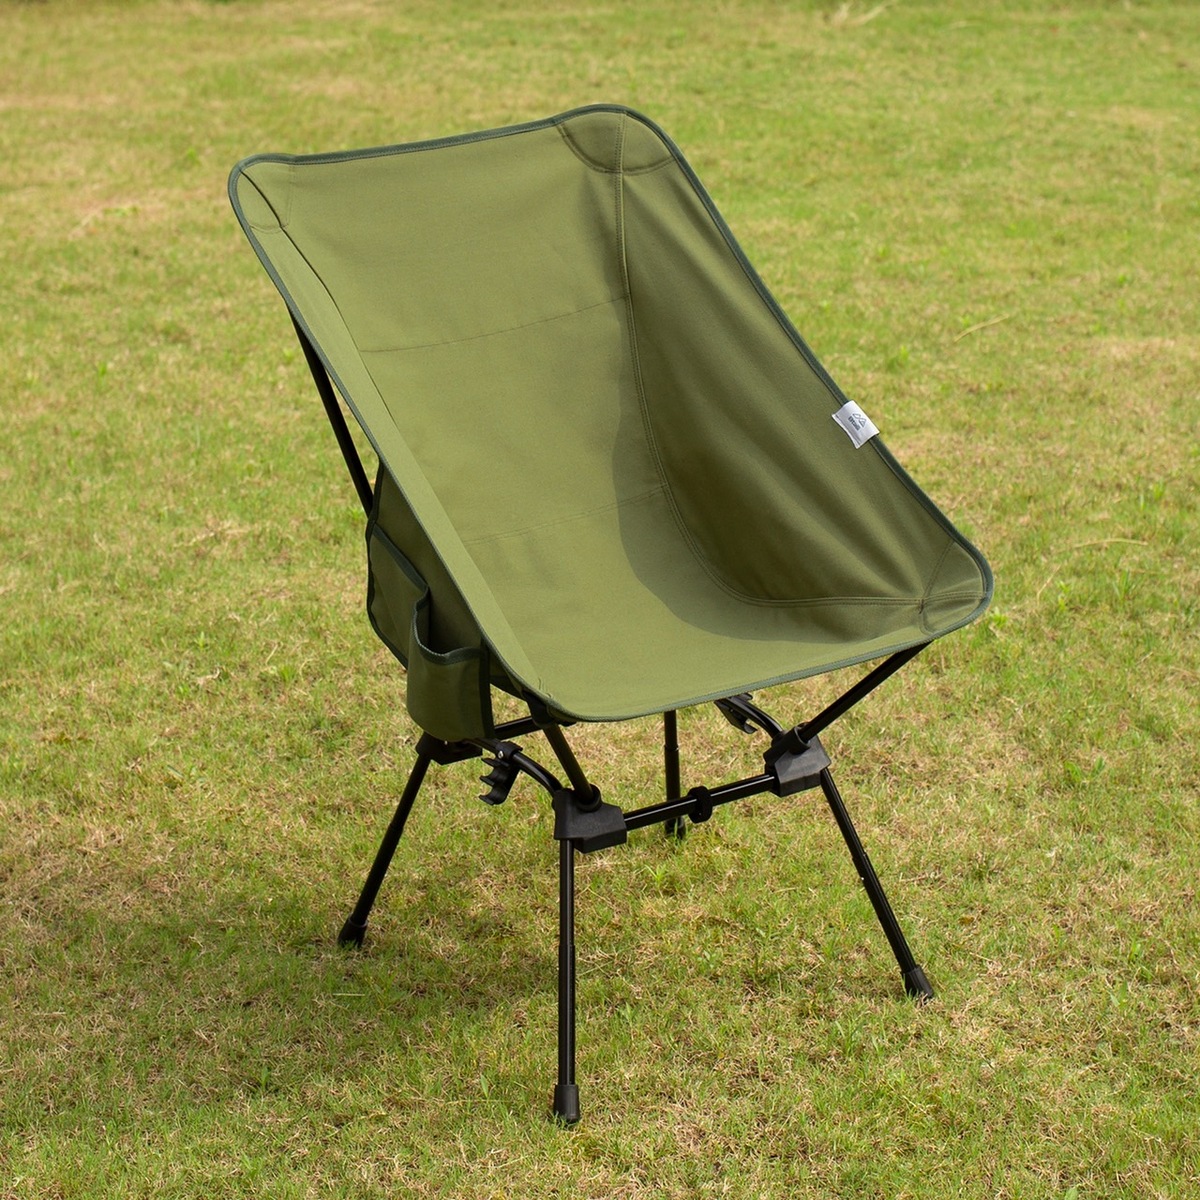 8tail ナイスナ椅子 あぐらチェア ローチェア キャンプ椅子 | Web shop 8tail